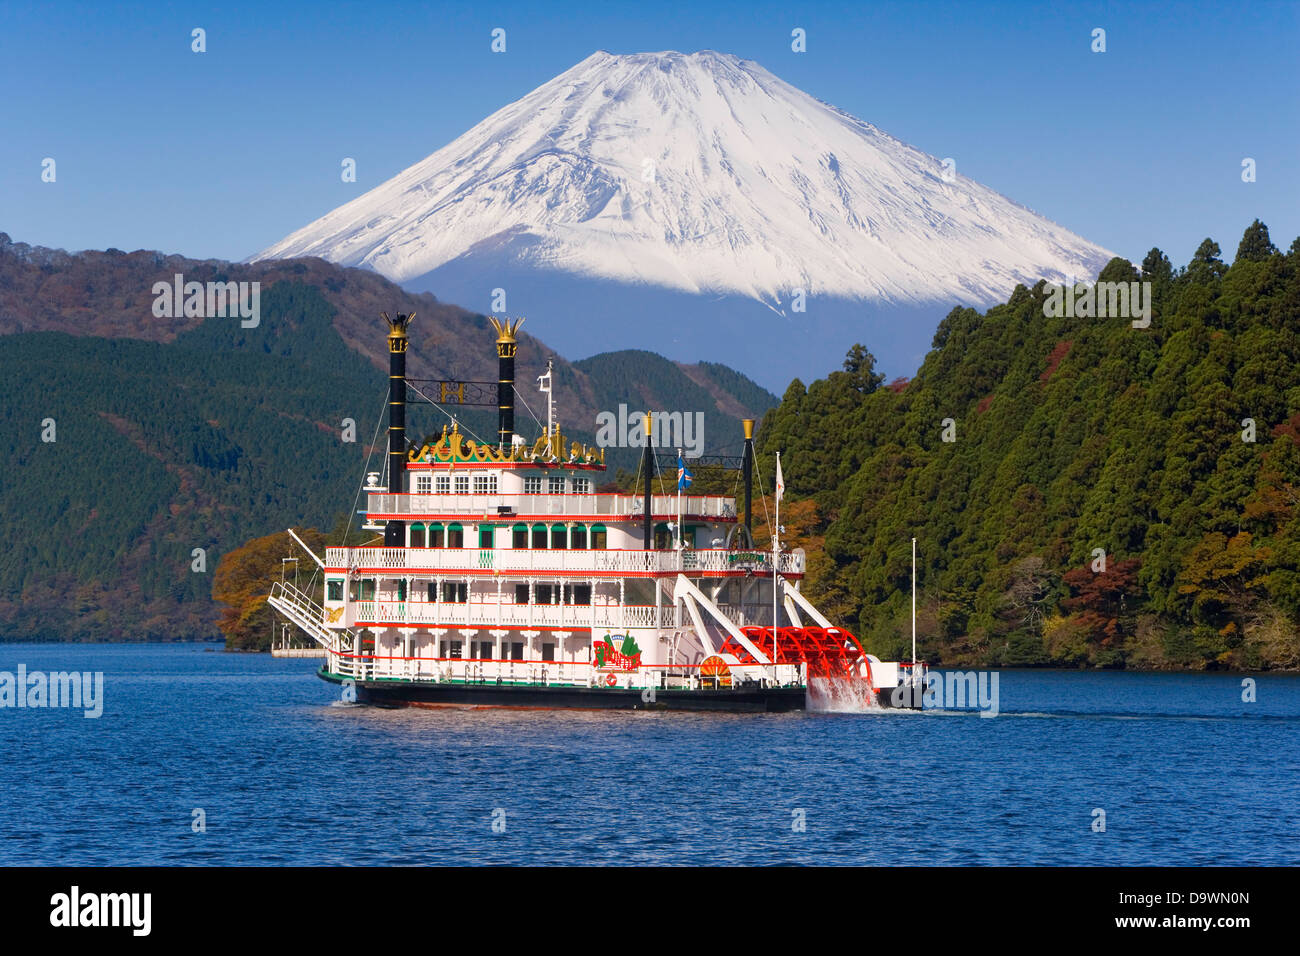 Japan, Central Honshu (Chubu), Fuji-Hakone-Izu National Park, Hakone, Tourist pleasure boat in front of Mount Fuji Stock Photo